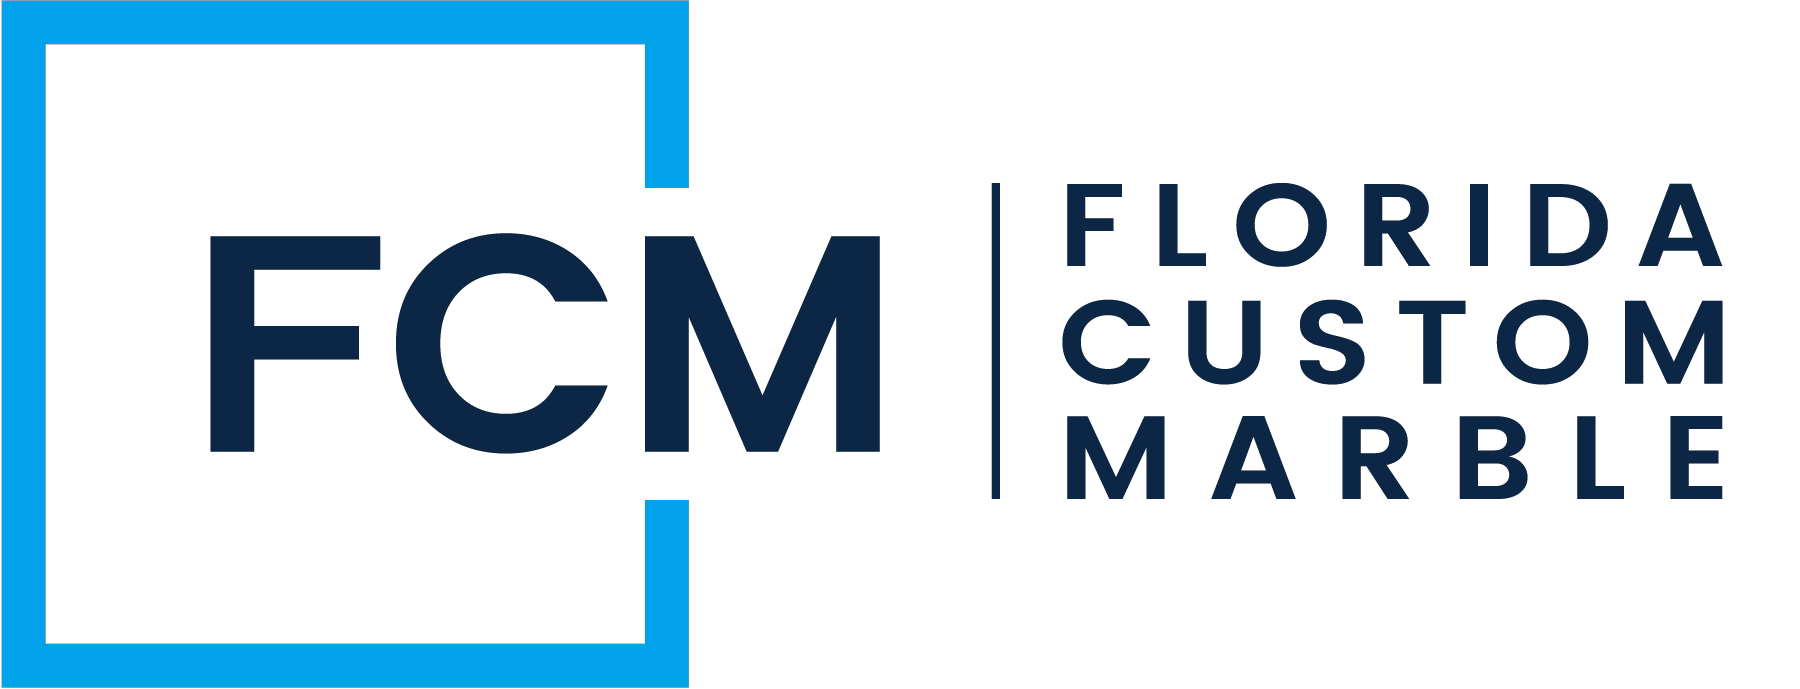 Florida Custom Marble logo